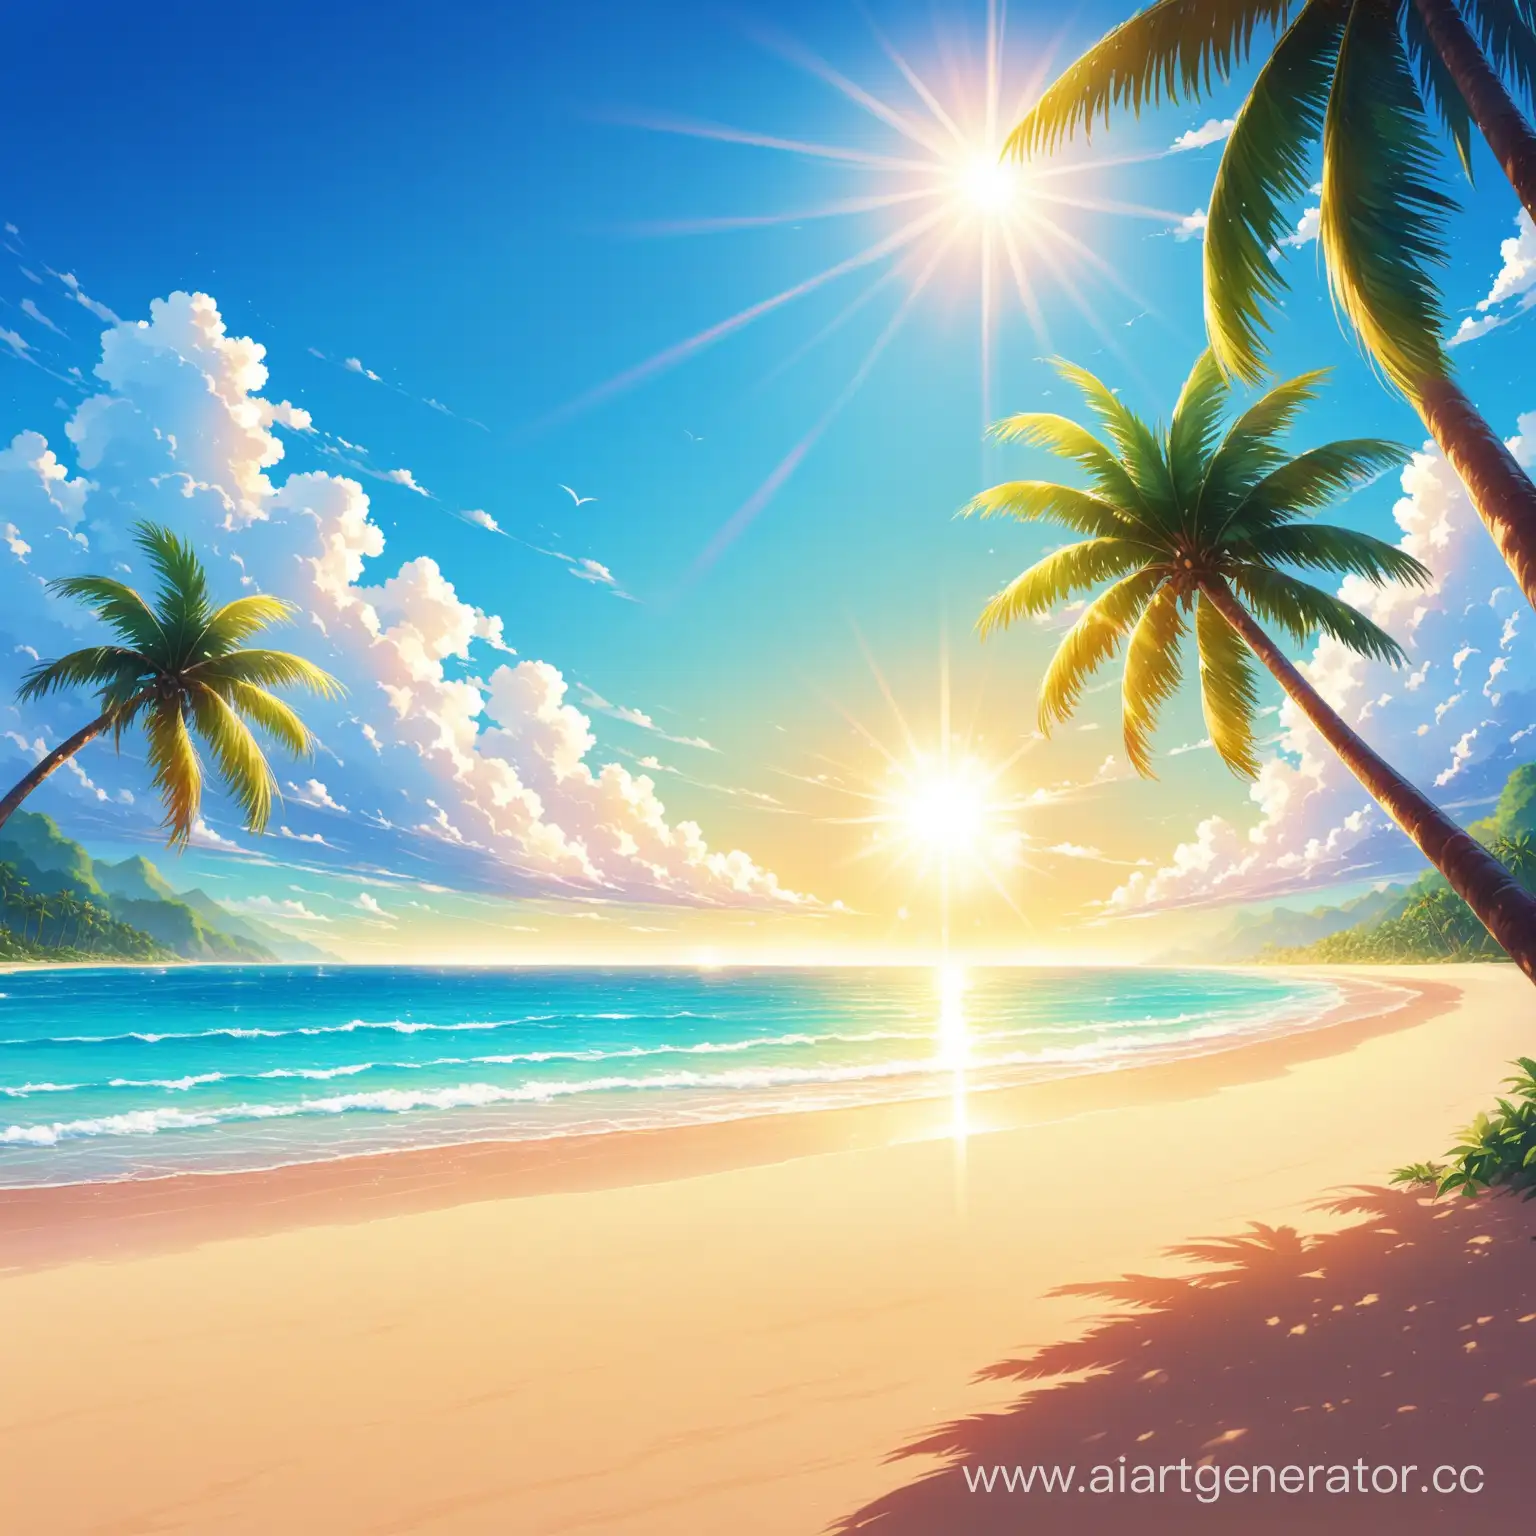 Tropical-Paradise-Vivid-Beach-Scene-with-Palm-Trees-and-Radiant-Sun